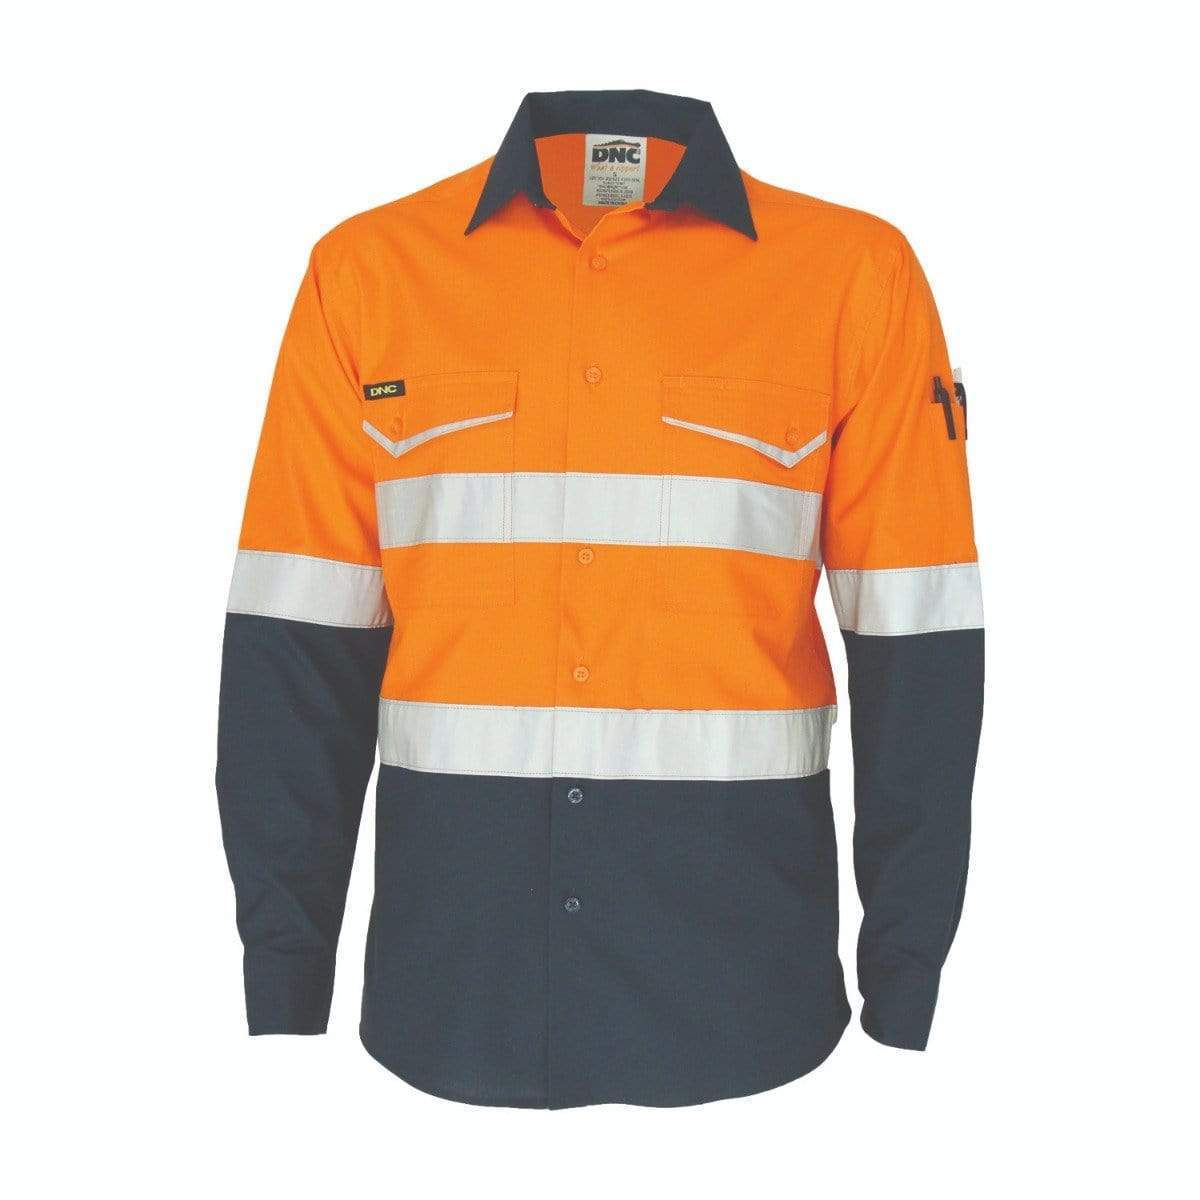 Dnc Workwear Two-tone Ripstop Cotton Long Sleeve Shirt With Reflective Csr Tape - 3588 Work Wear DNC Workwear Orange/Navy XS 